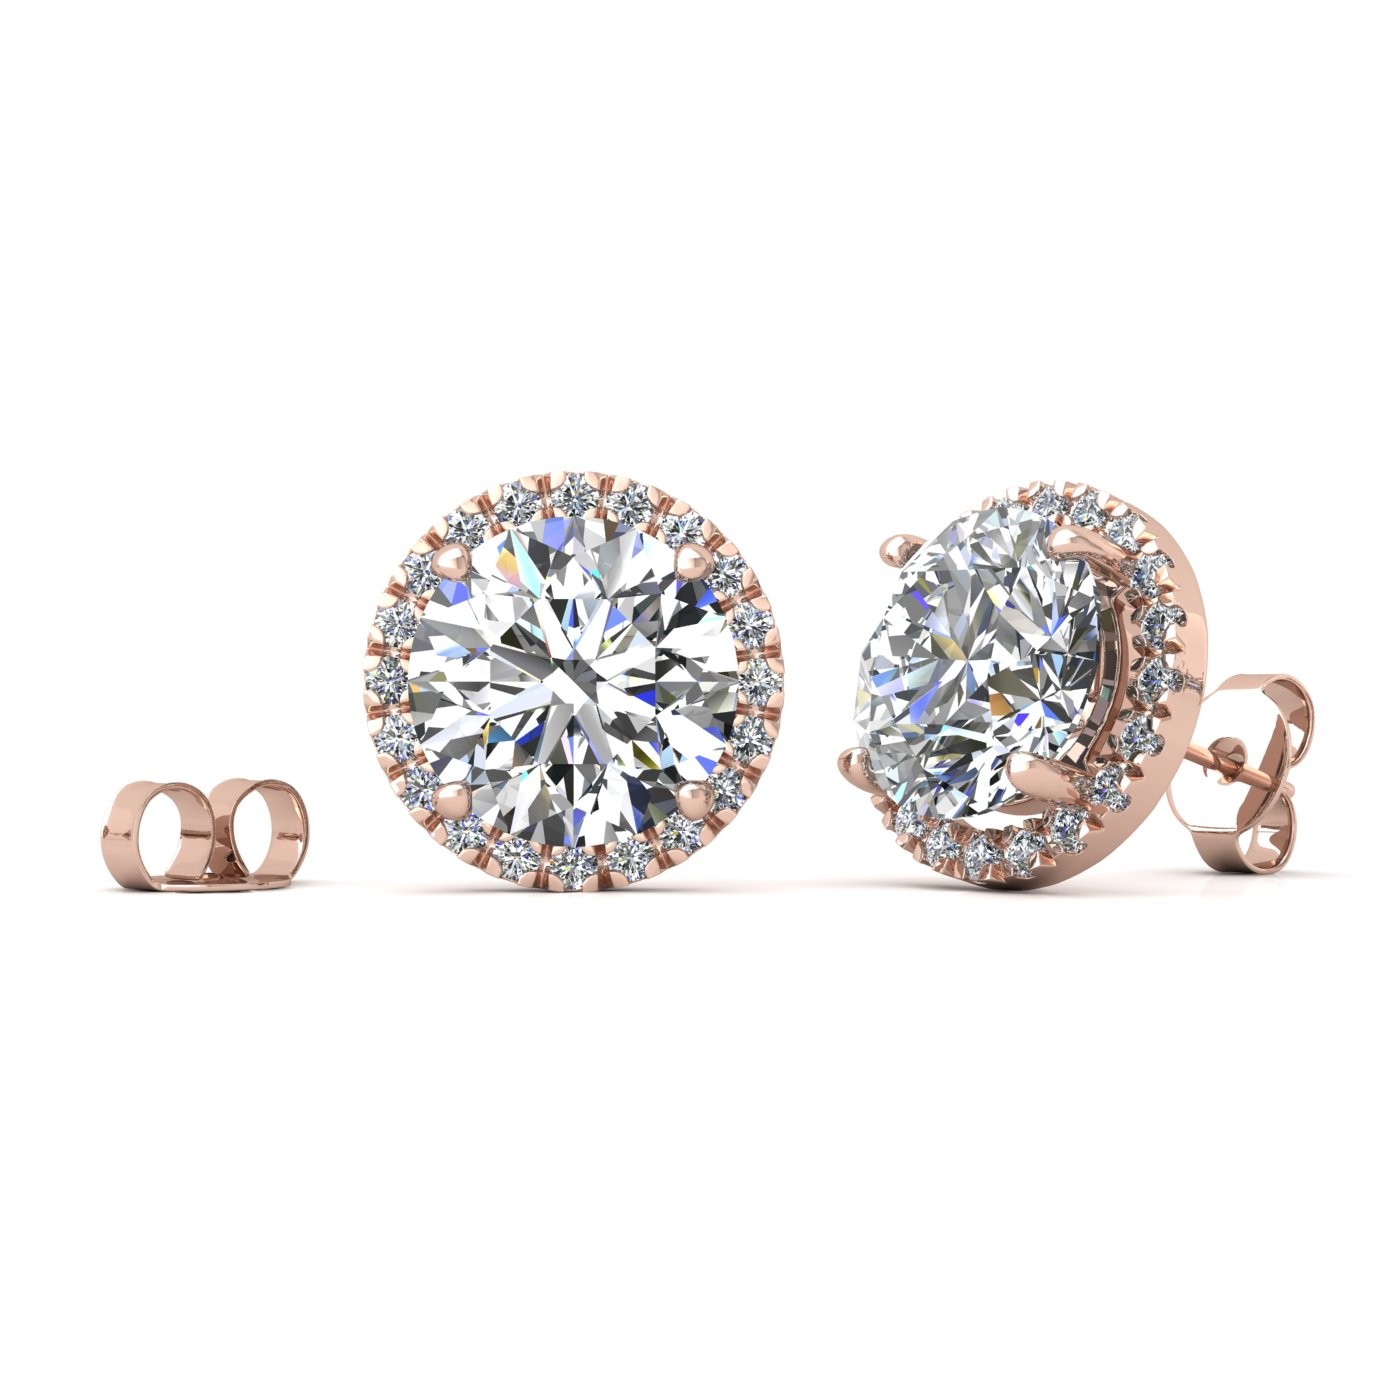 18k rose gold  0,3 ct each (0,6 tcw) 4 prongs round shape diamond earrings with diamond pavÉ set halo Photos & images